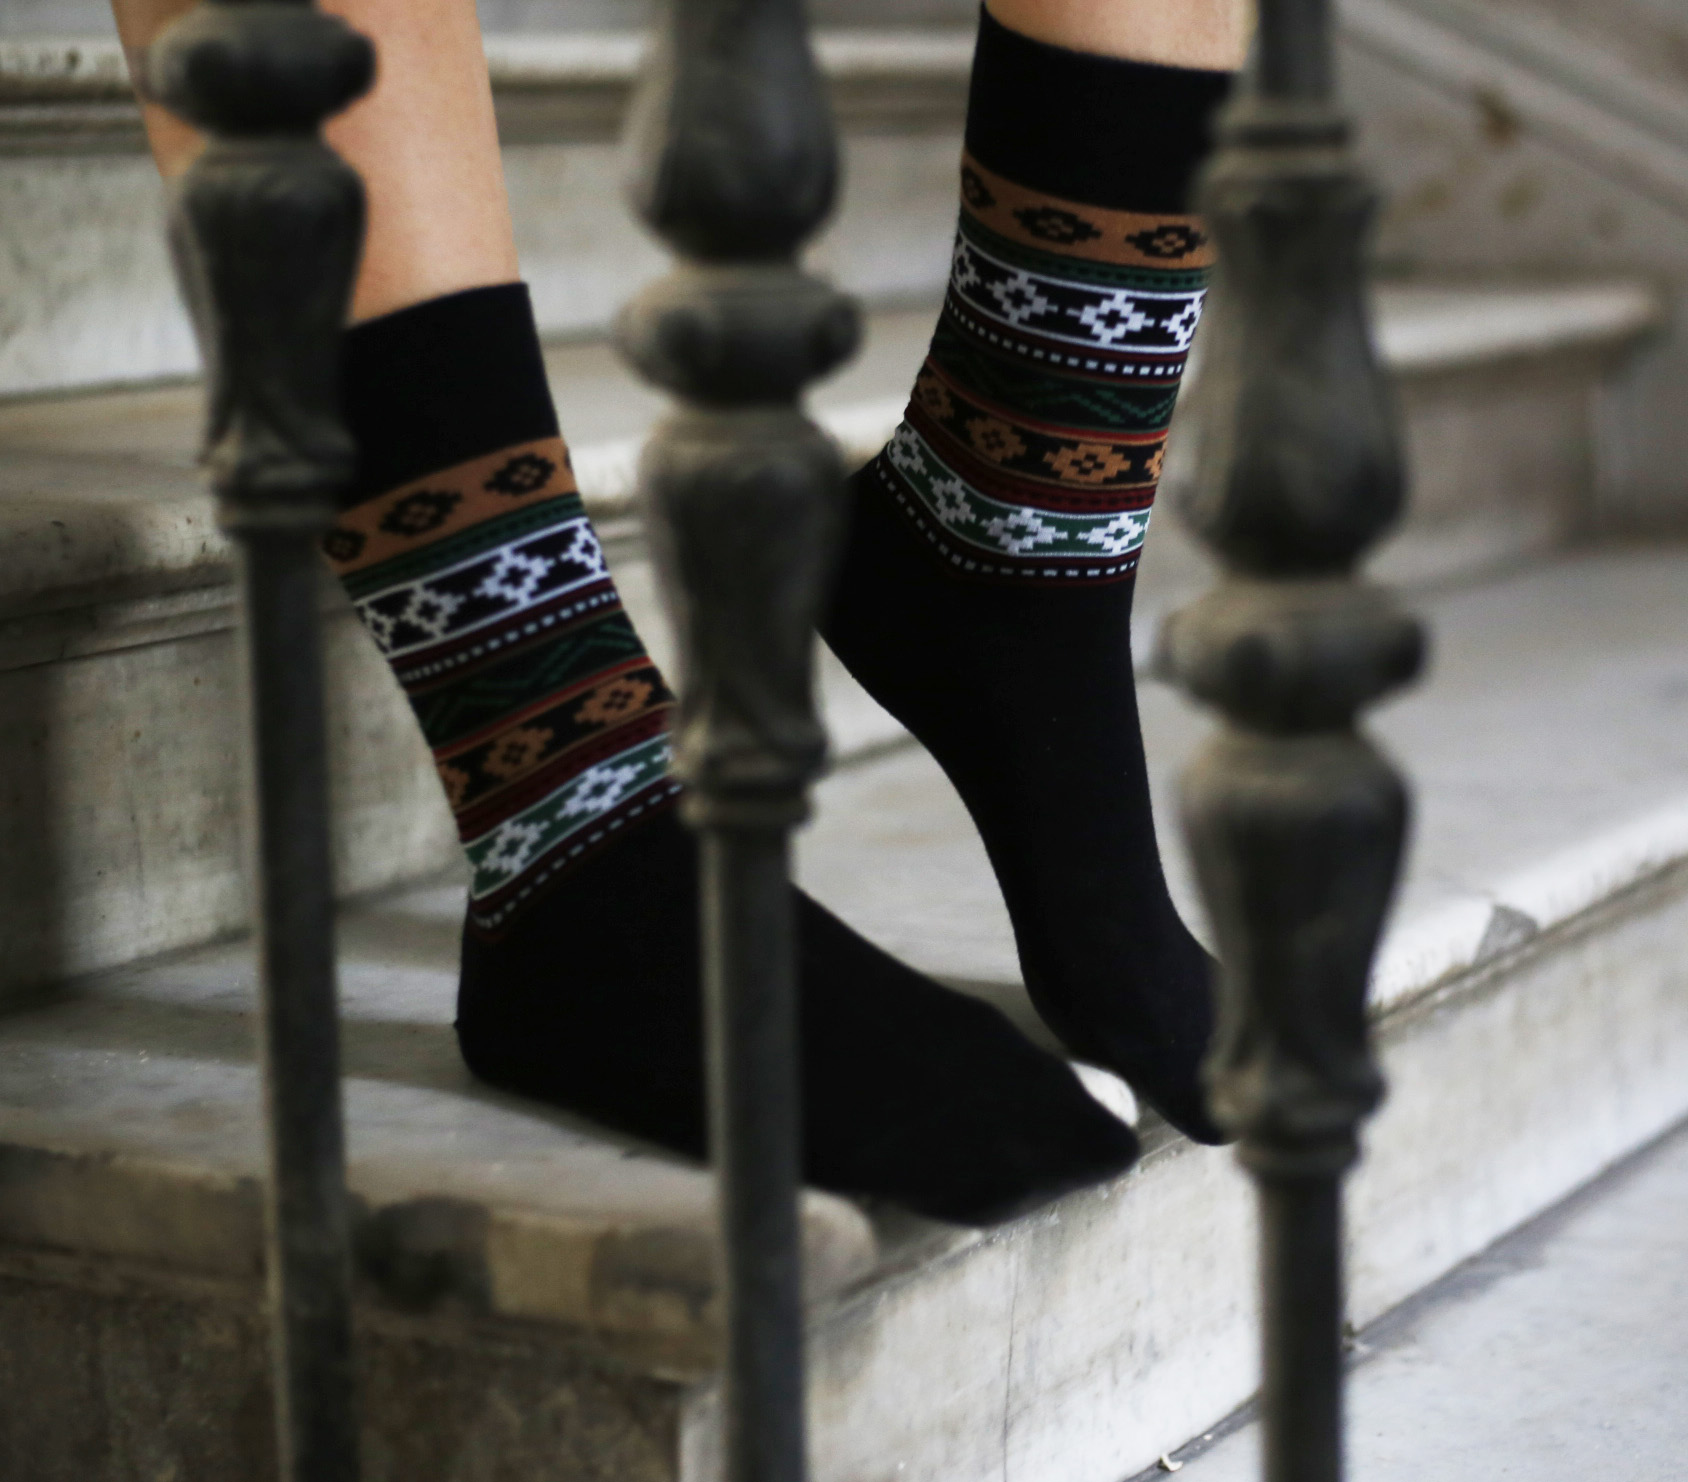 Socks with Tushetian Ornament